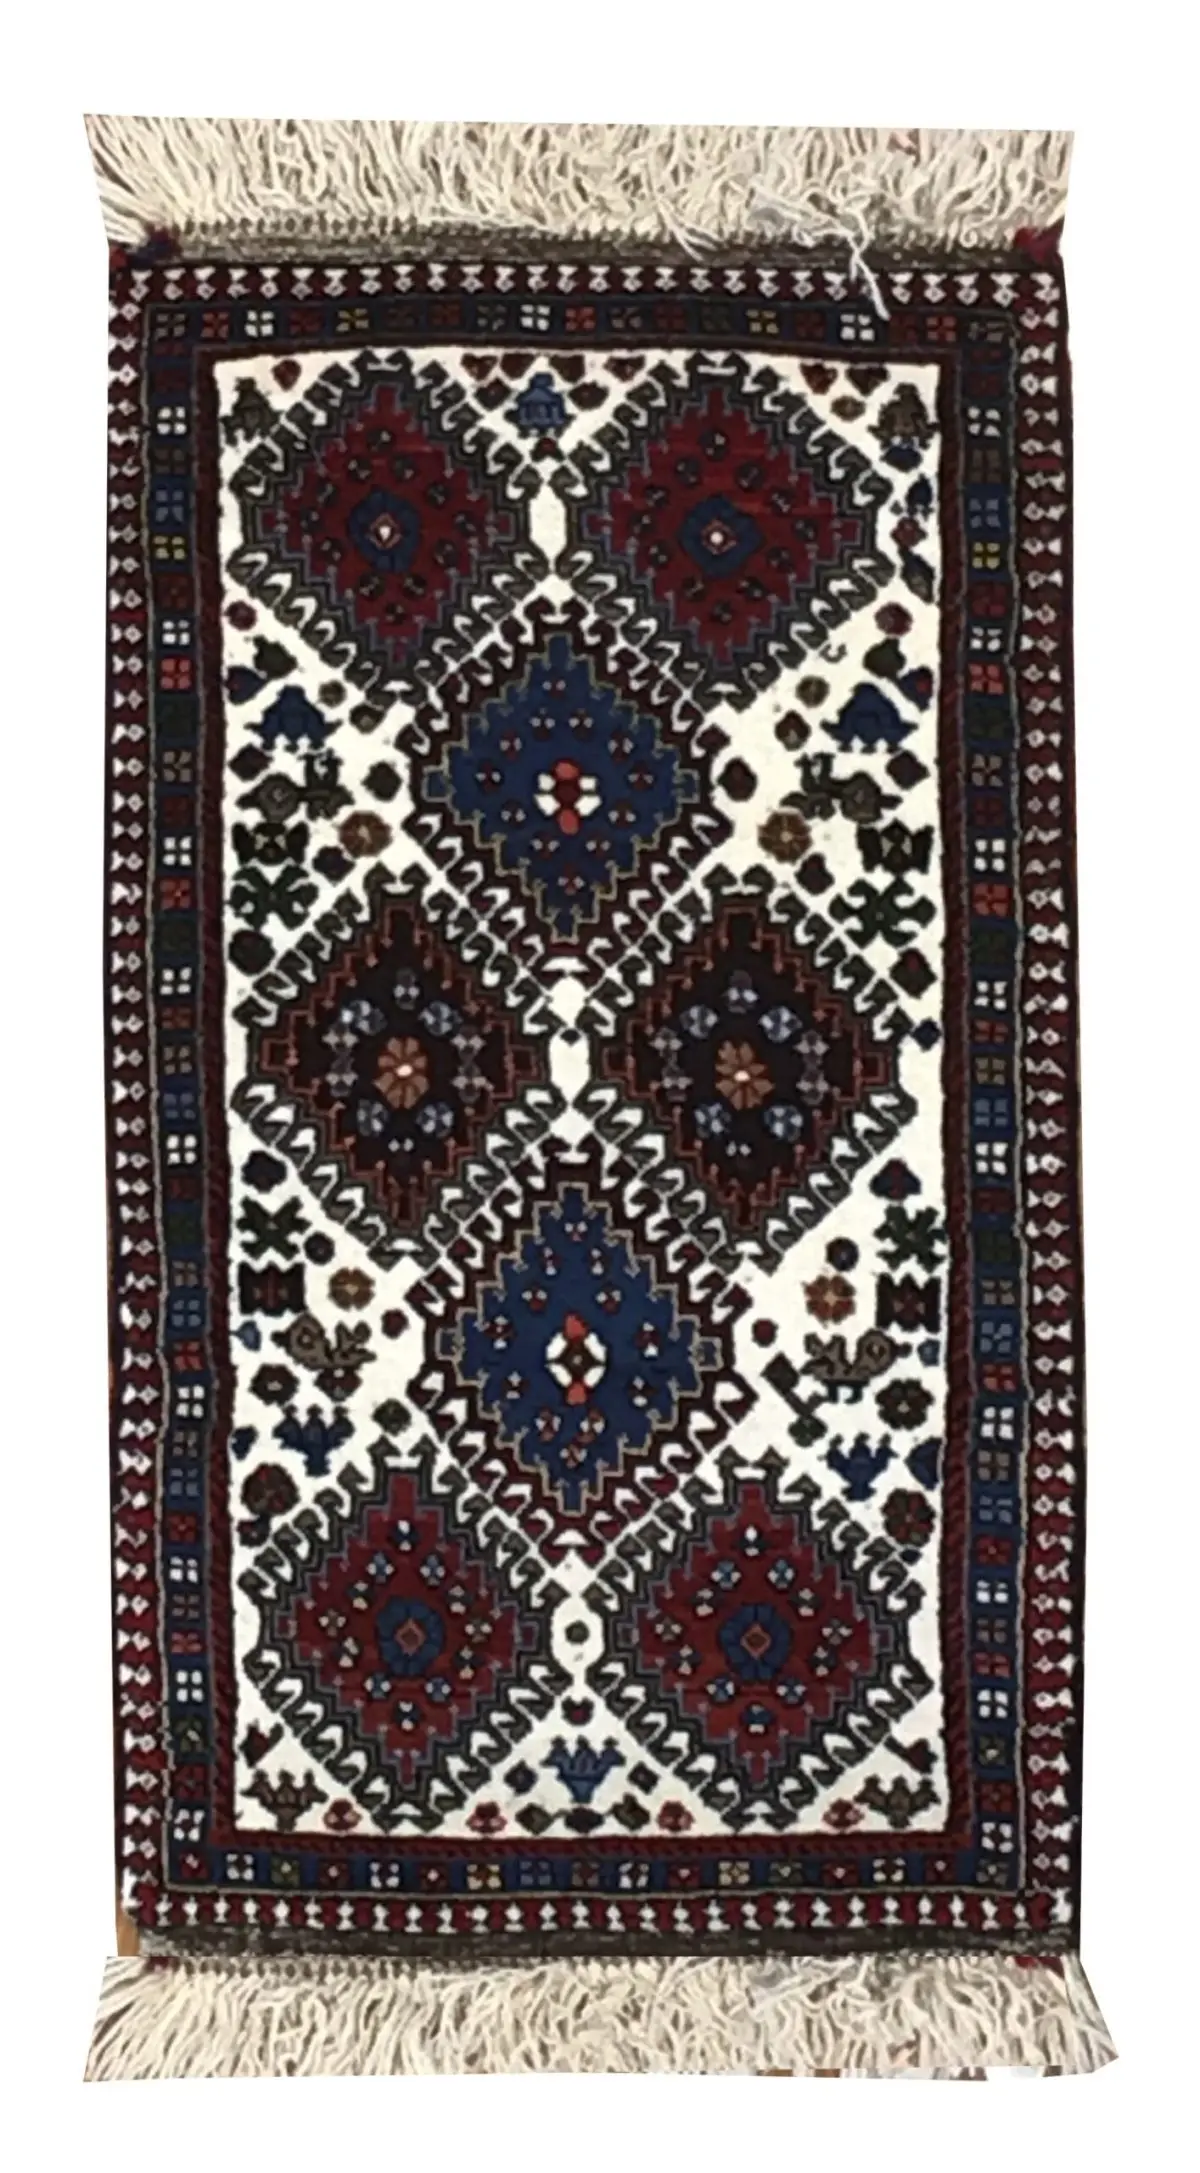 Persian Yallameh rug 1' 9" x 3' Handmade Area Rug - Shabahang Royal Carpet